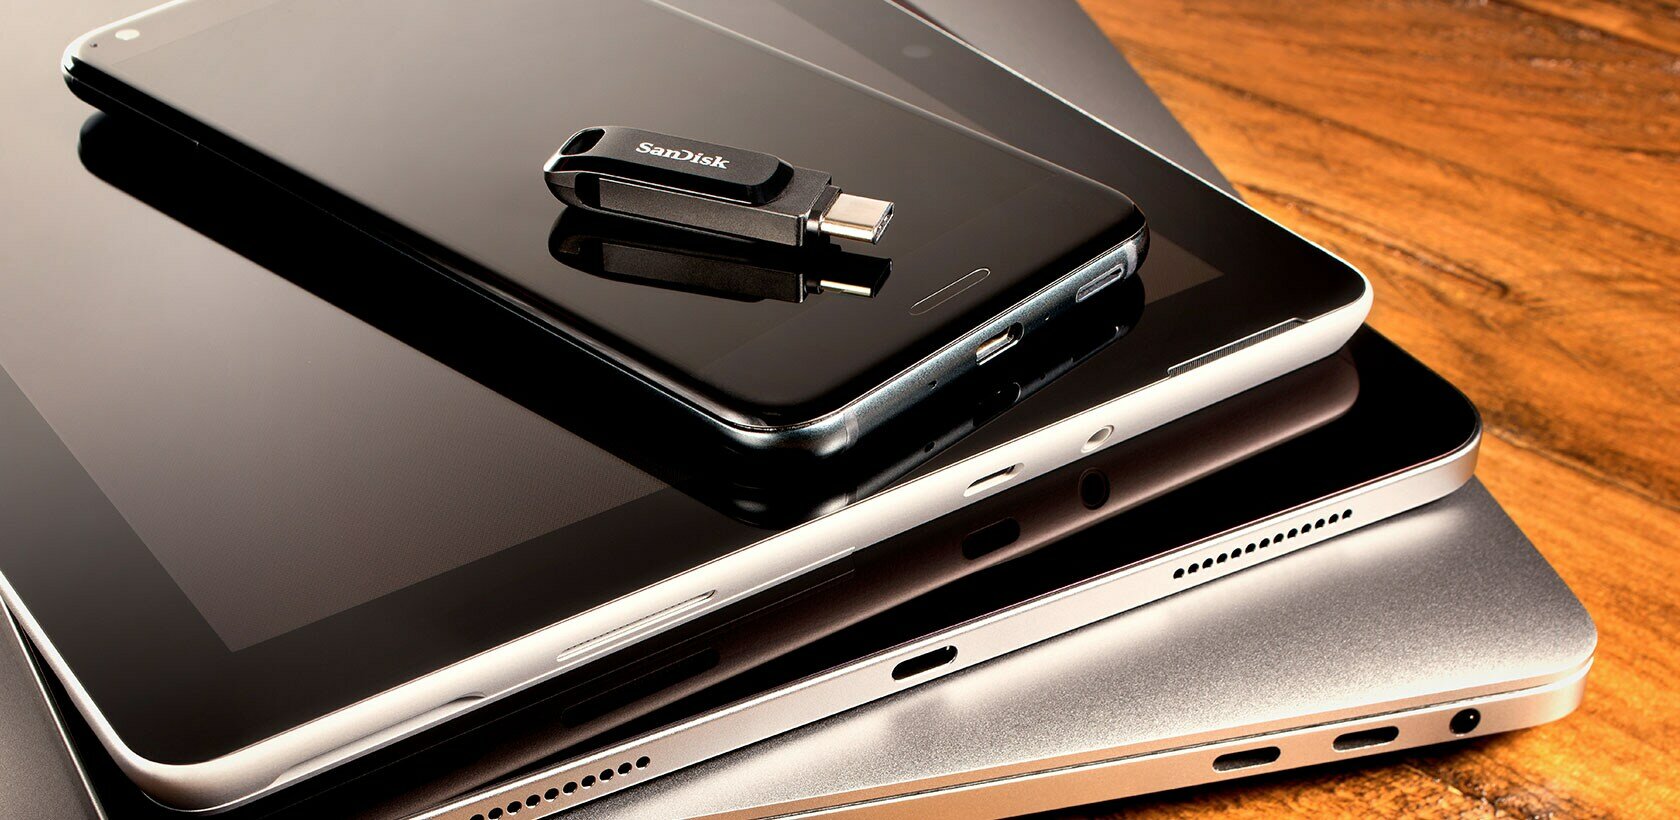 Sandisk Flash 128GB Mobile Drive Go Dual USB Type-C